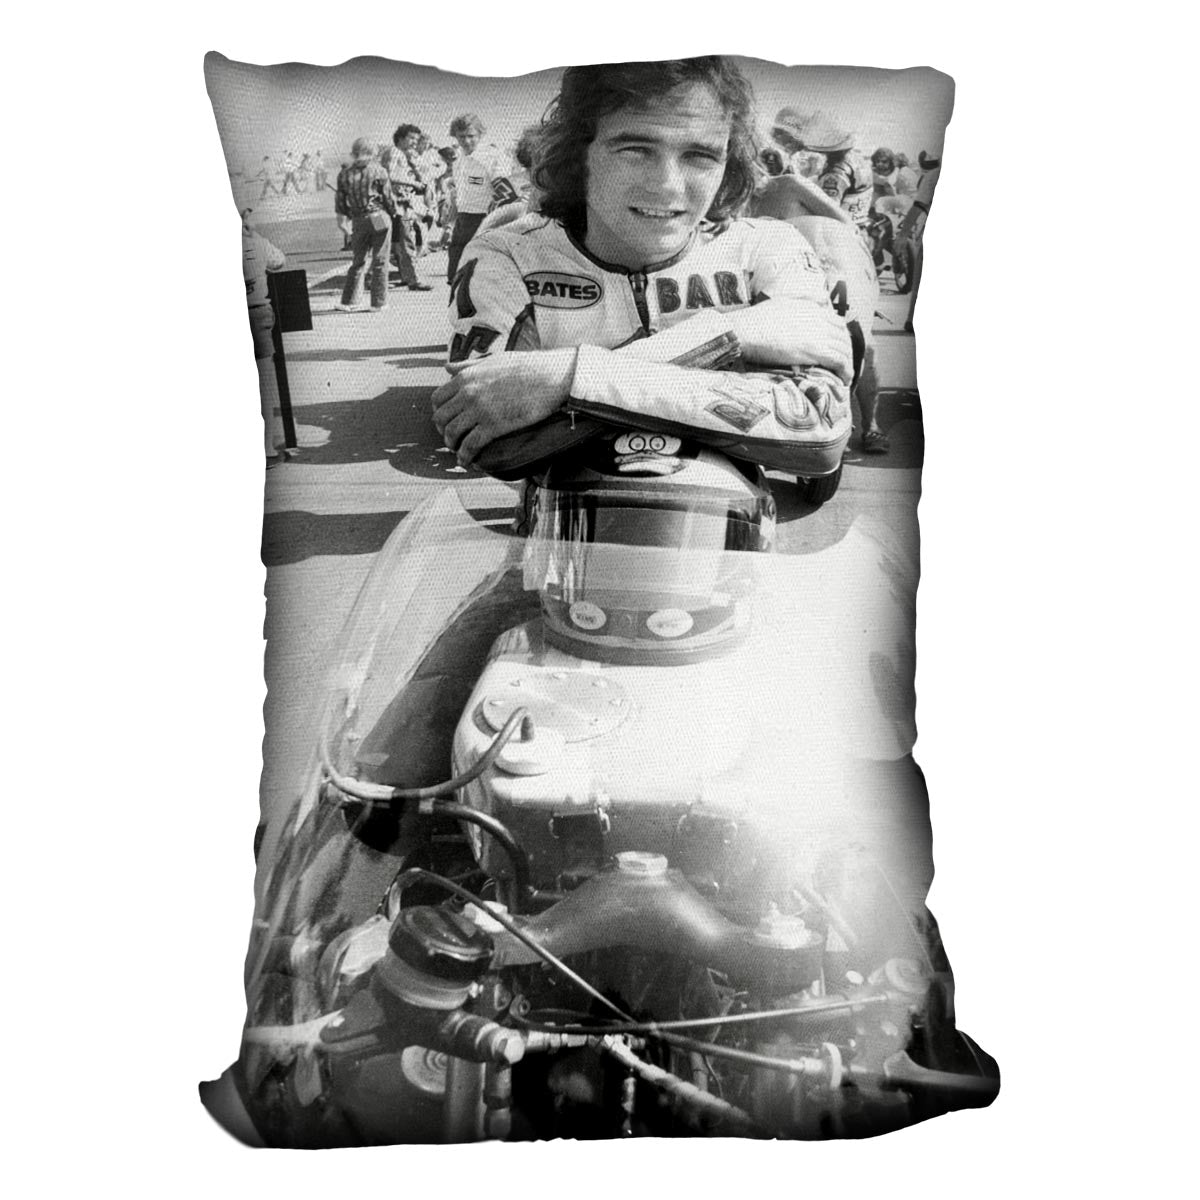 Barry Sheene motorcycle racing champion Cushion